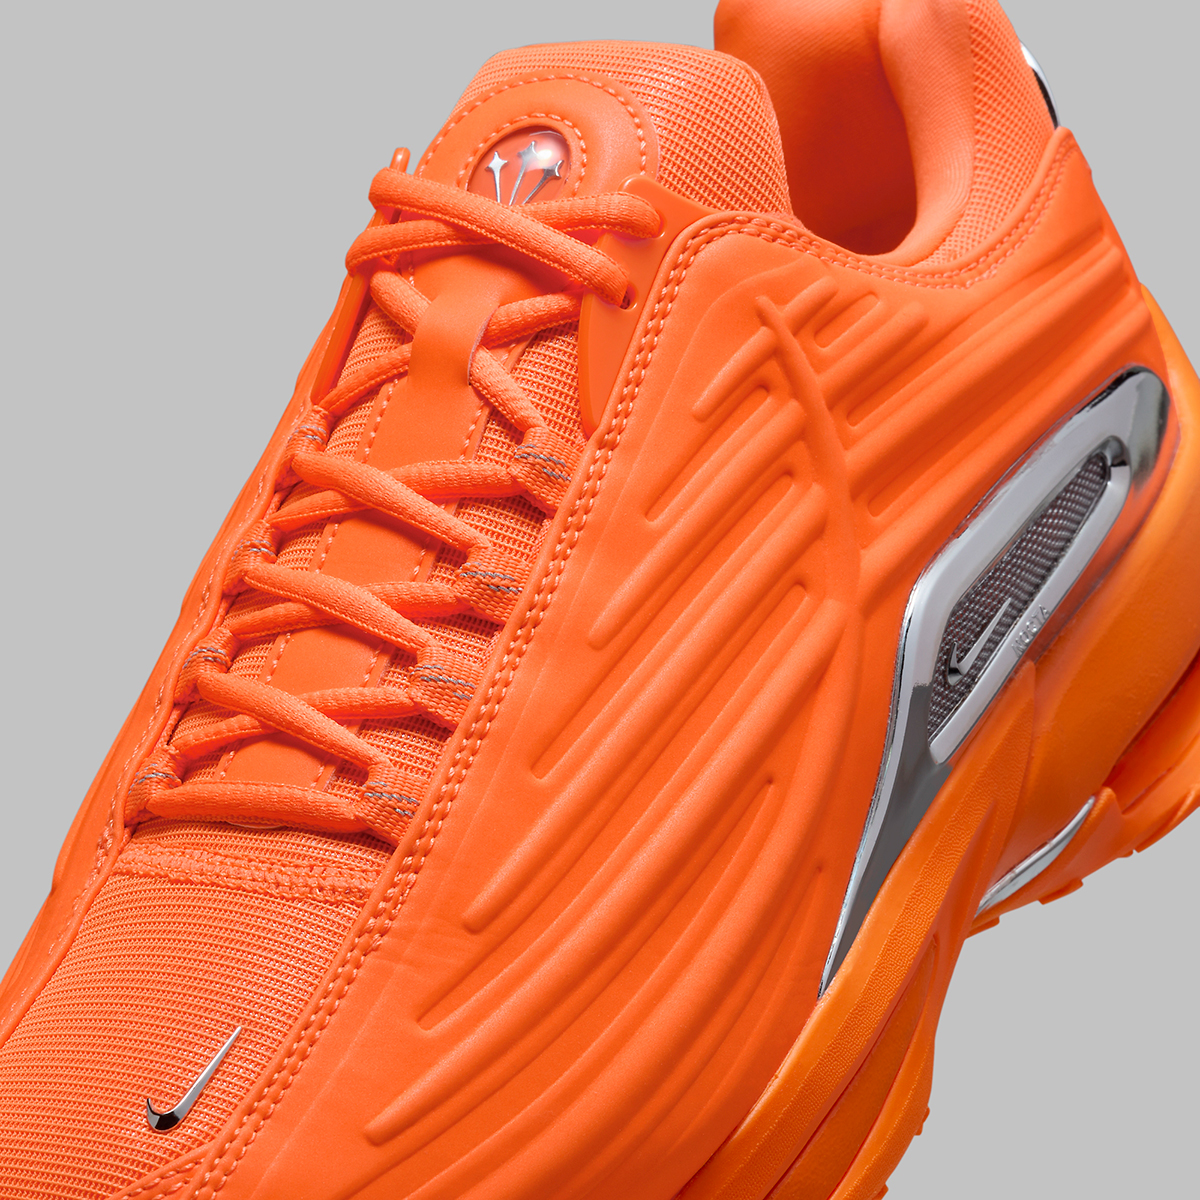 Nike Nocta Hot Step 2 Total Orange Dz7293 800 Release Date 4